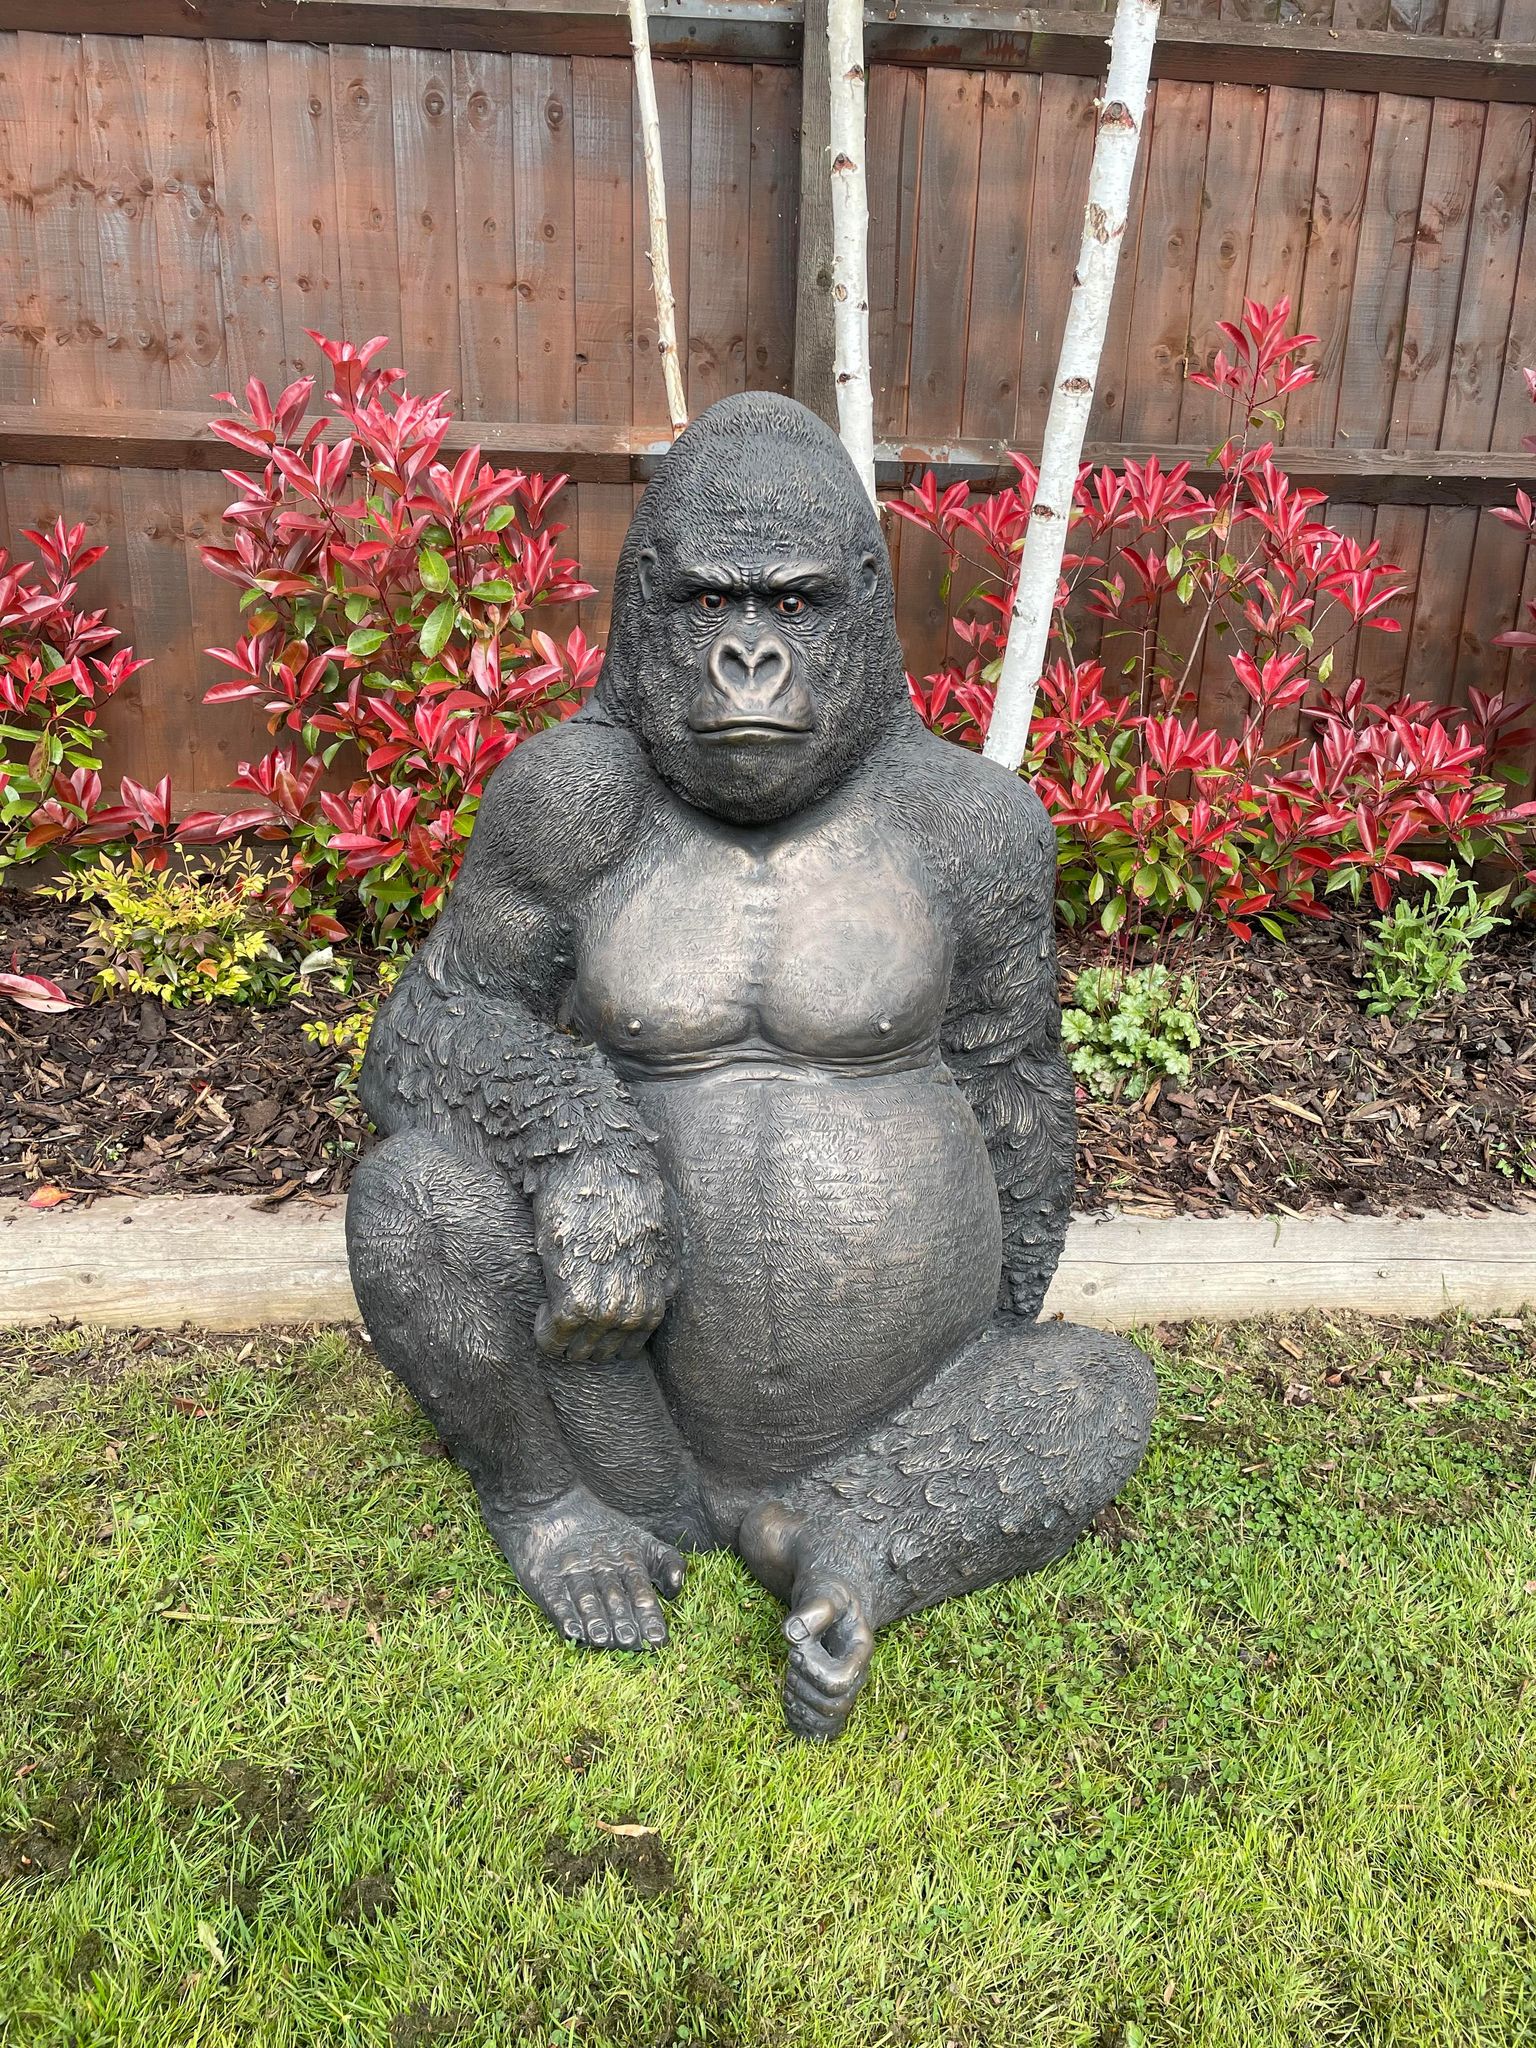 Life Size Gorilla Sculpture - Sitting